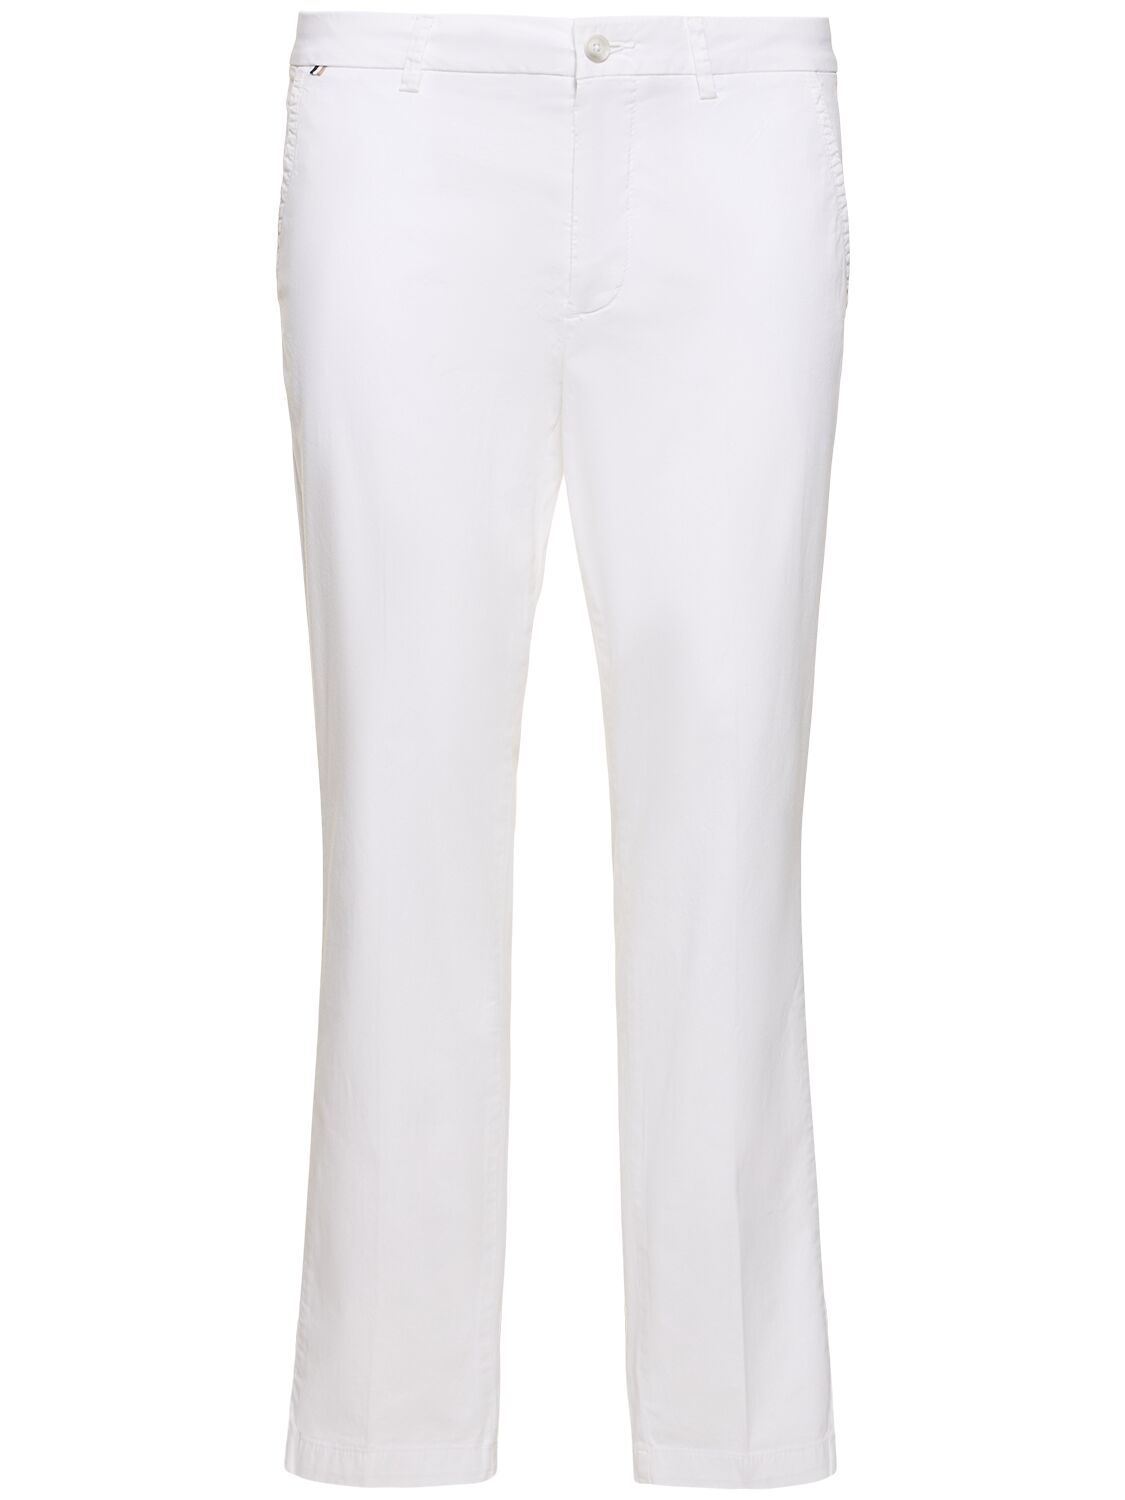 Hugo Boss Kaiton Stretch Cotton Pants In White